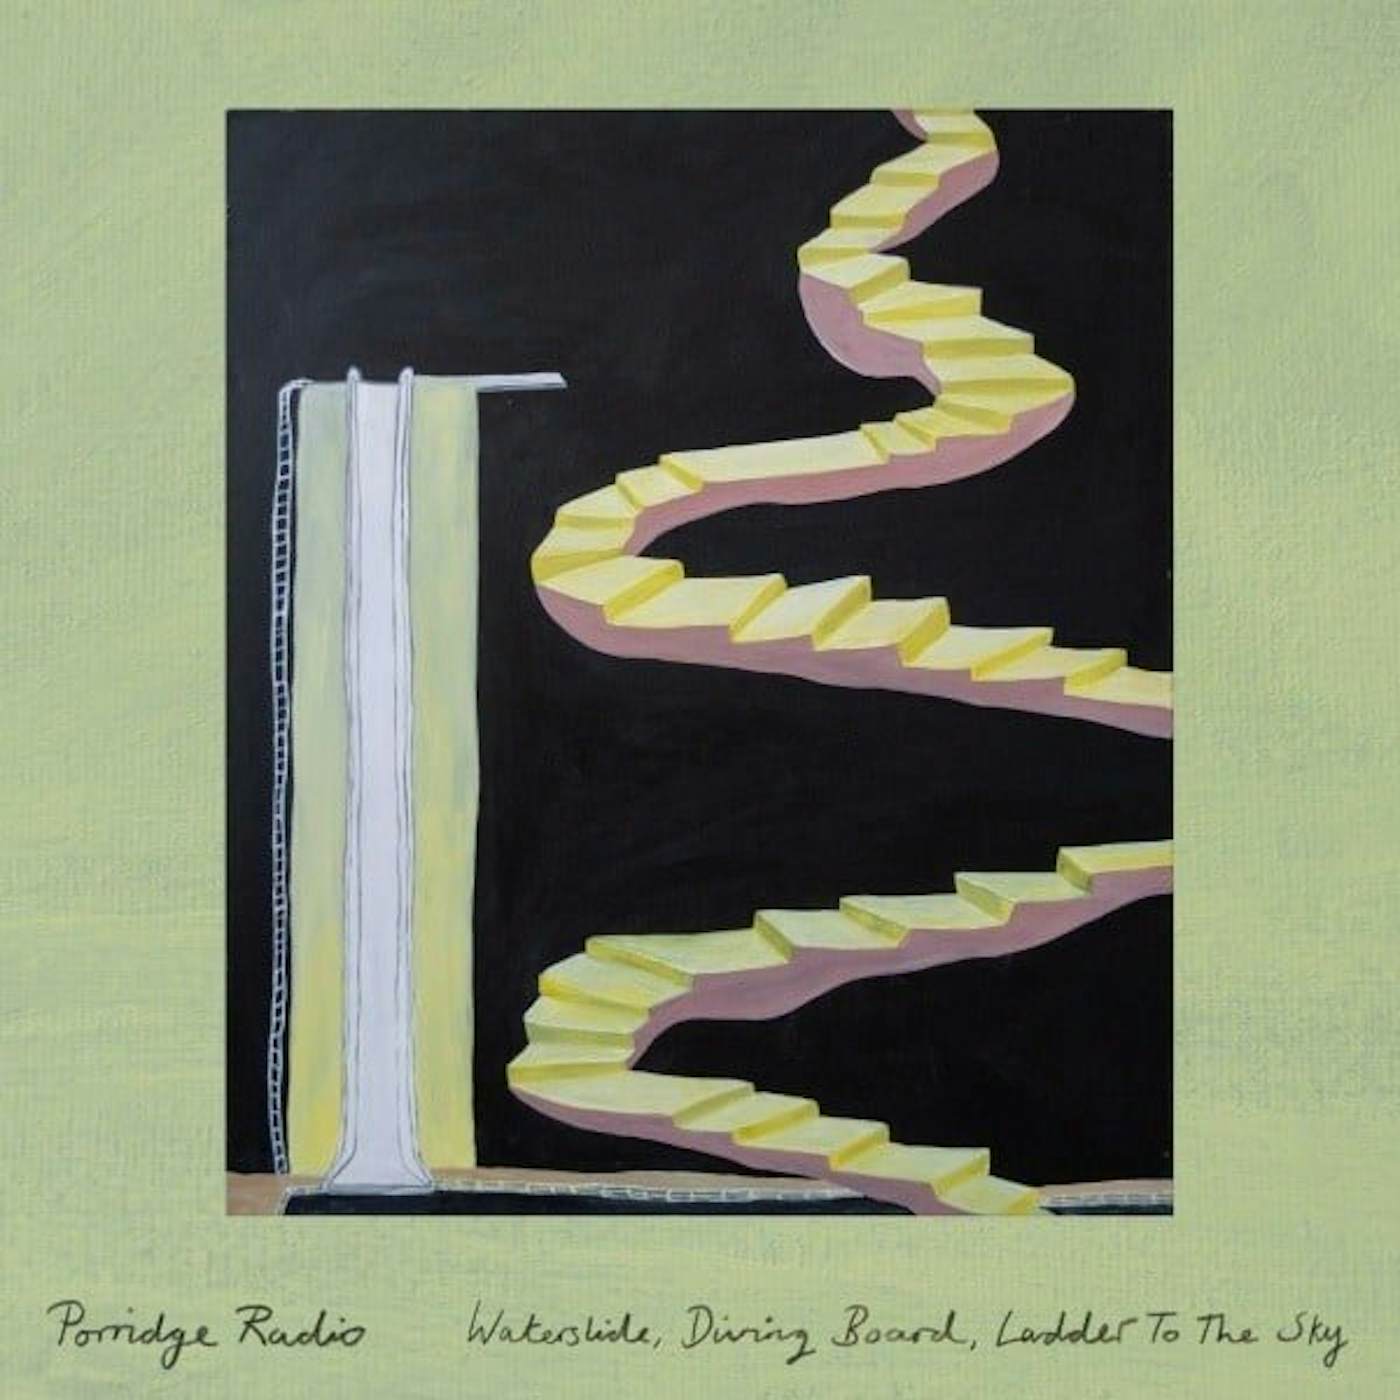 Porridge Radio Waterslide, Diving Board, Ladder To The Sky (Forest Green Translucent Vinyl) Vinyl Record